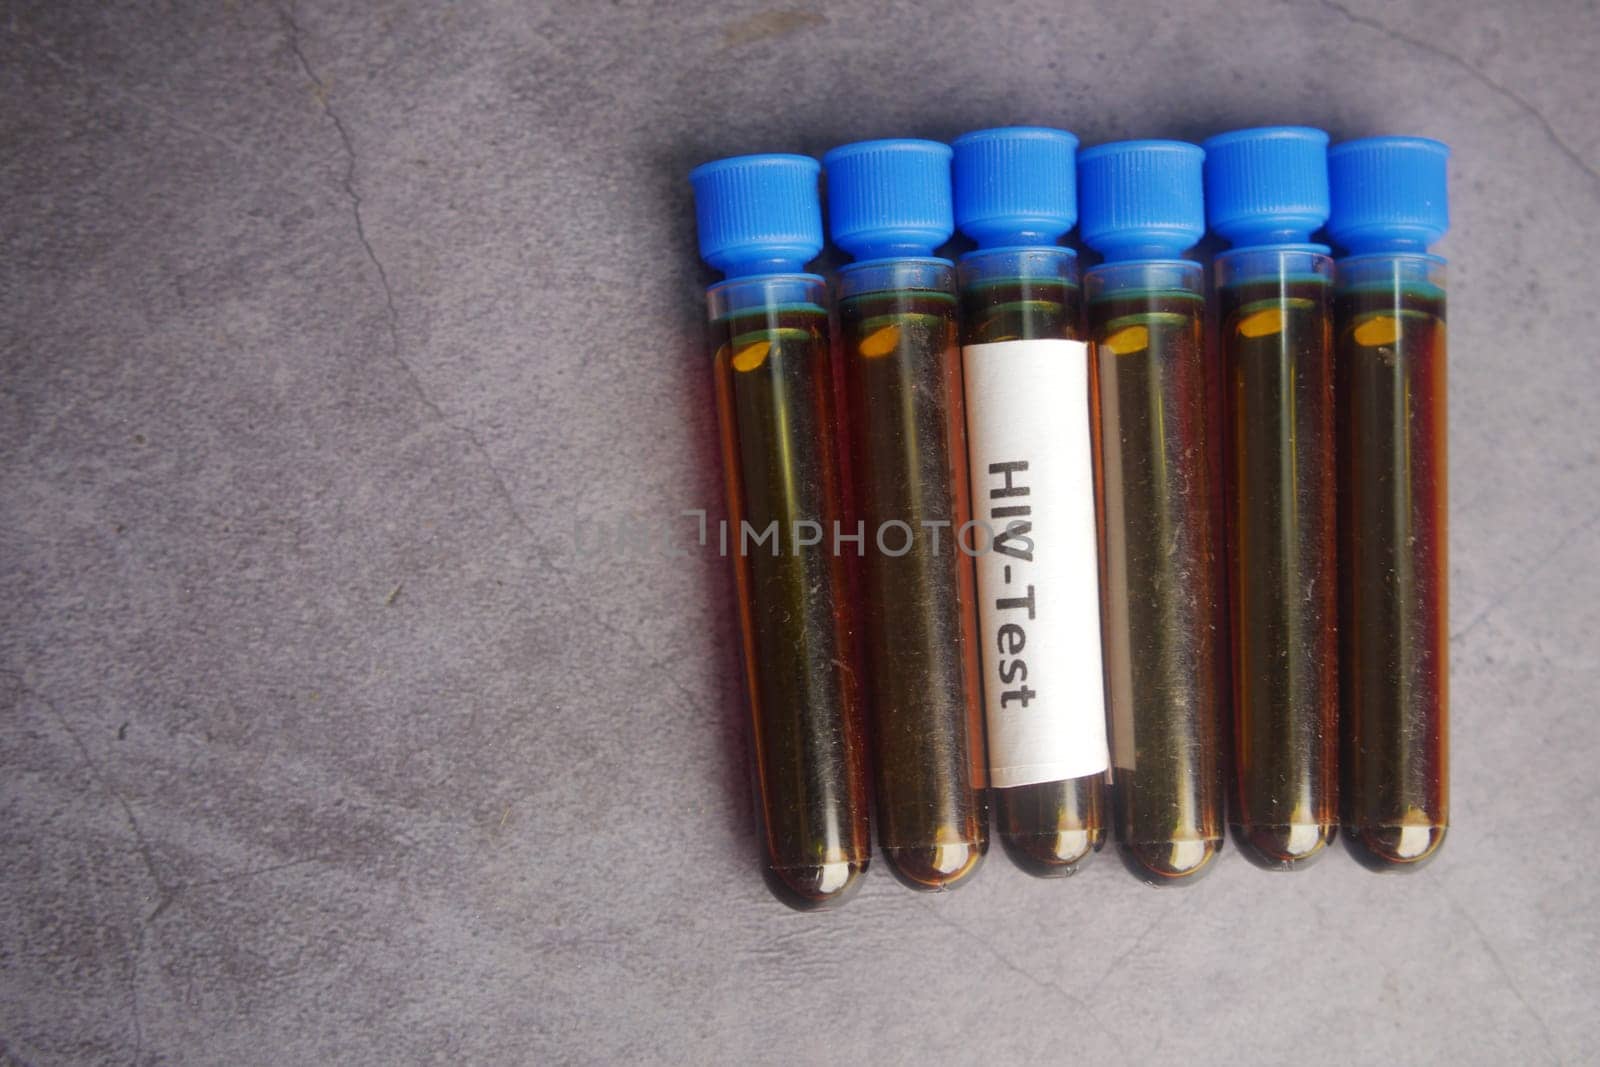 HIV blood test tube on black background by towfiq007